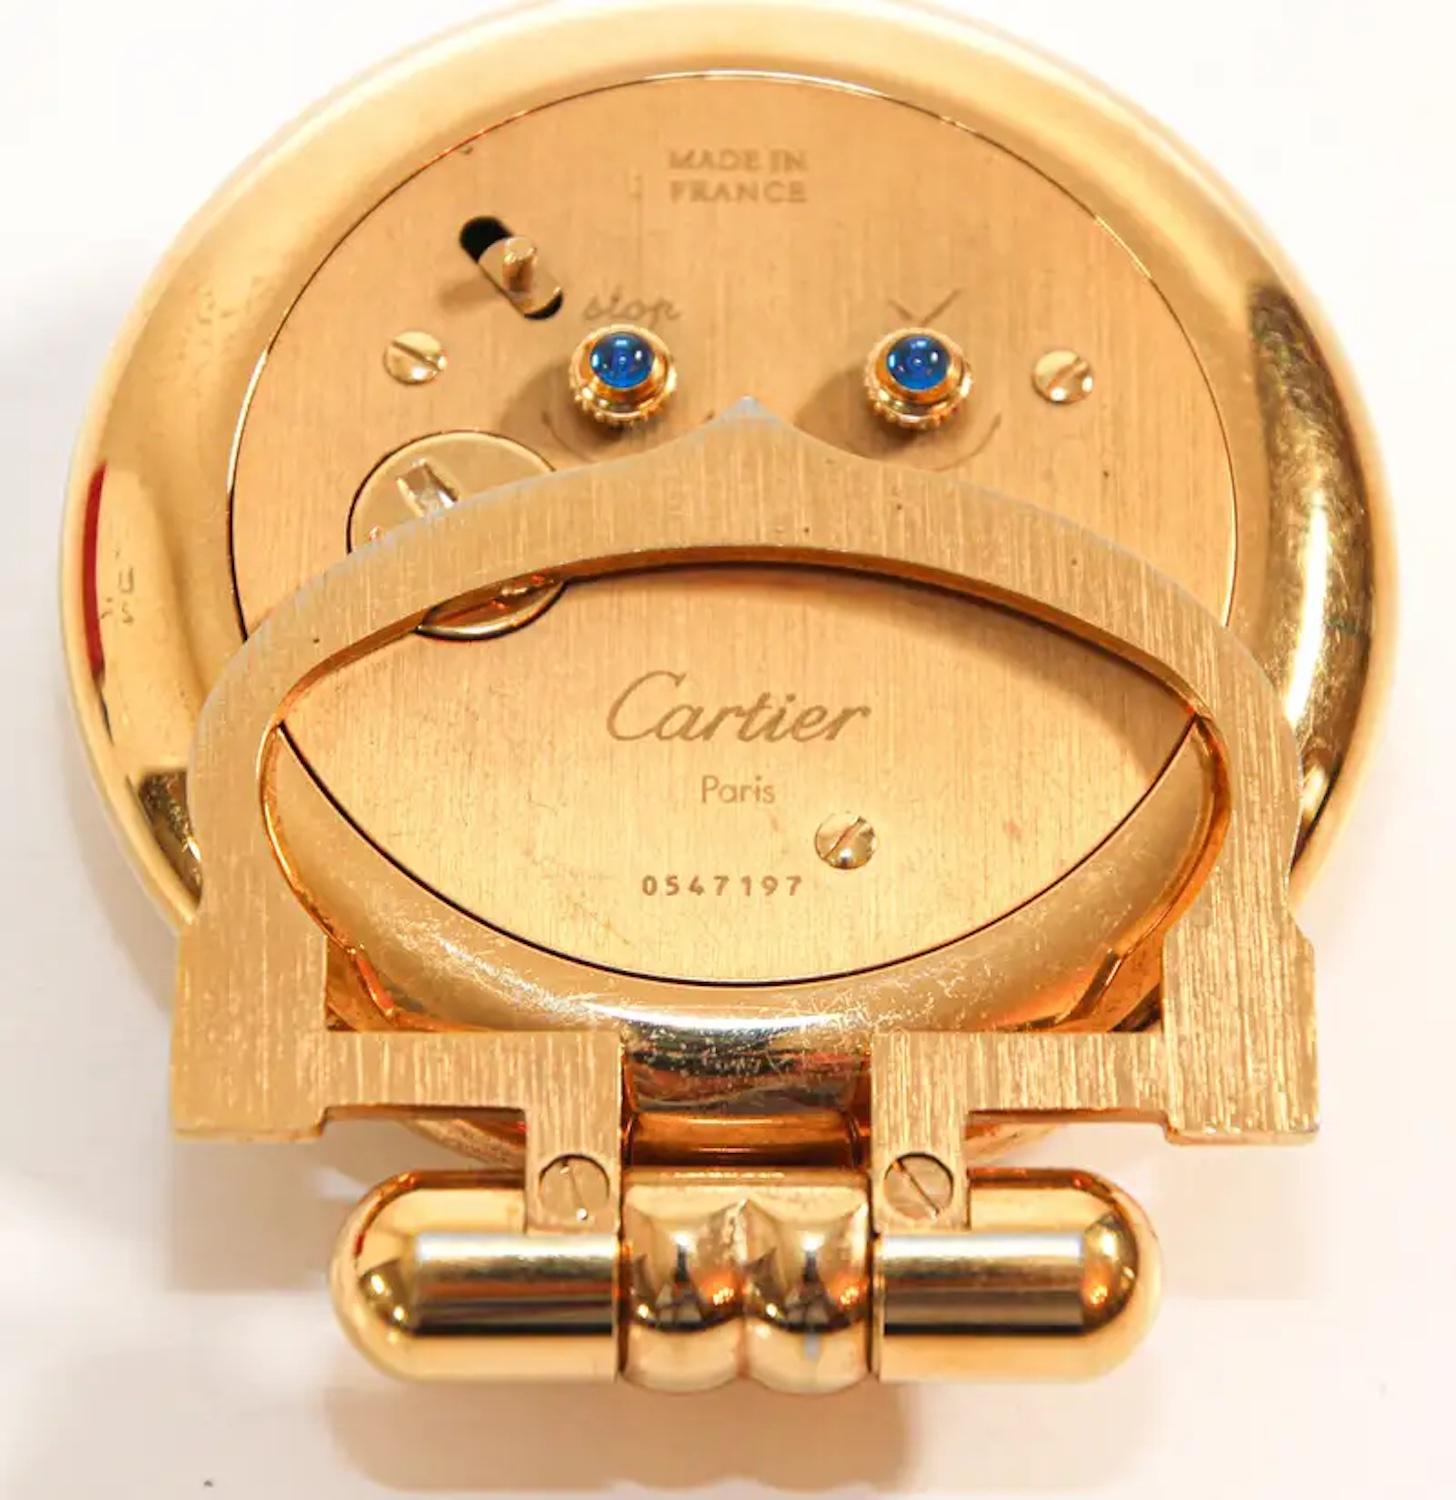 Cartier Colisee Art Deco Travel Desk Clock 24-Karat Gold-Plated 5